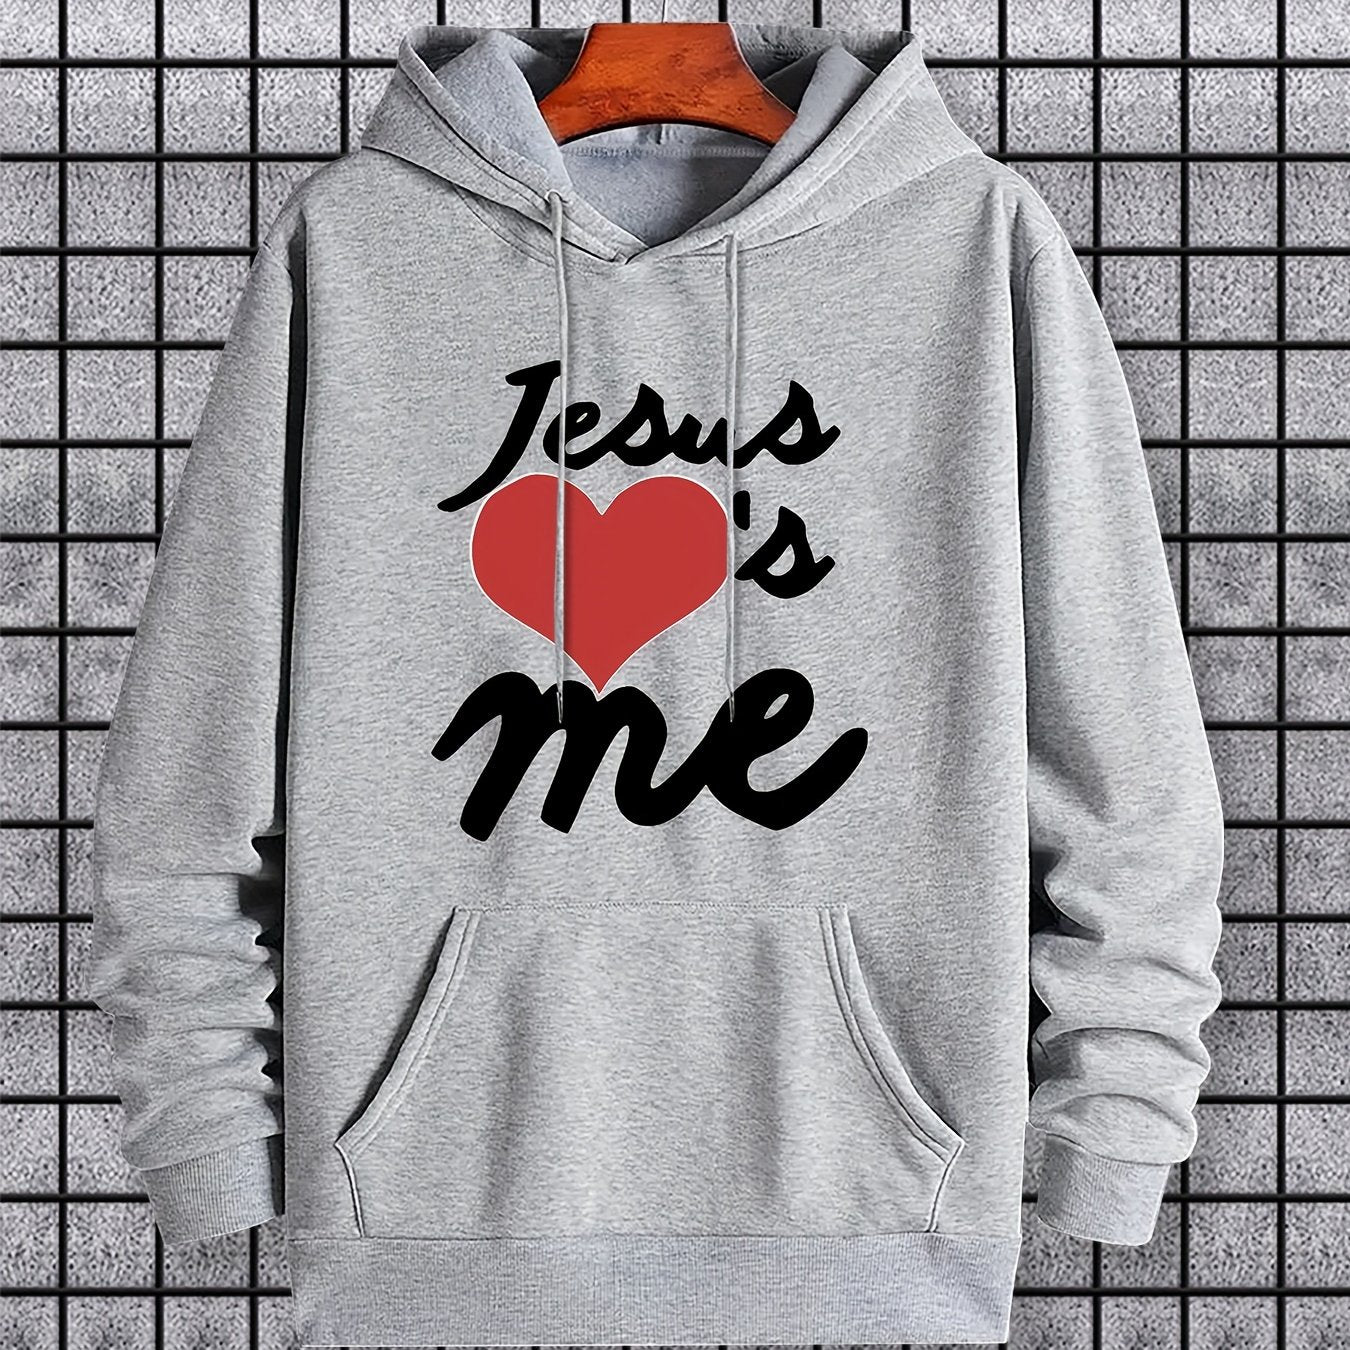 Jesus Loves Me Unisex Christian Pullover Hooded Sweatshirt claimedbygoddesigns